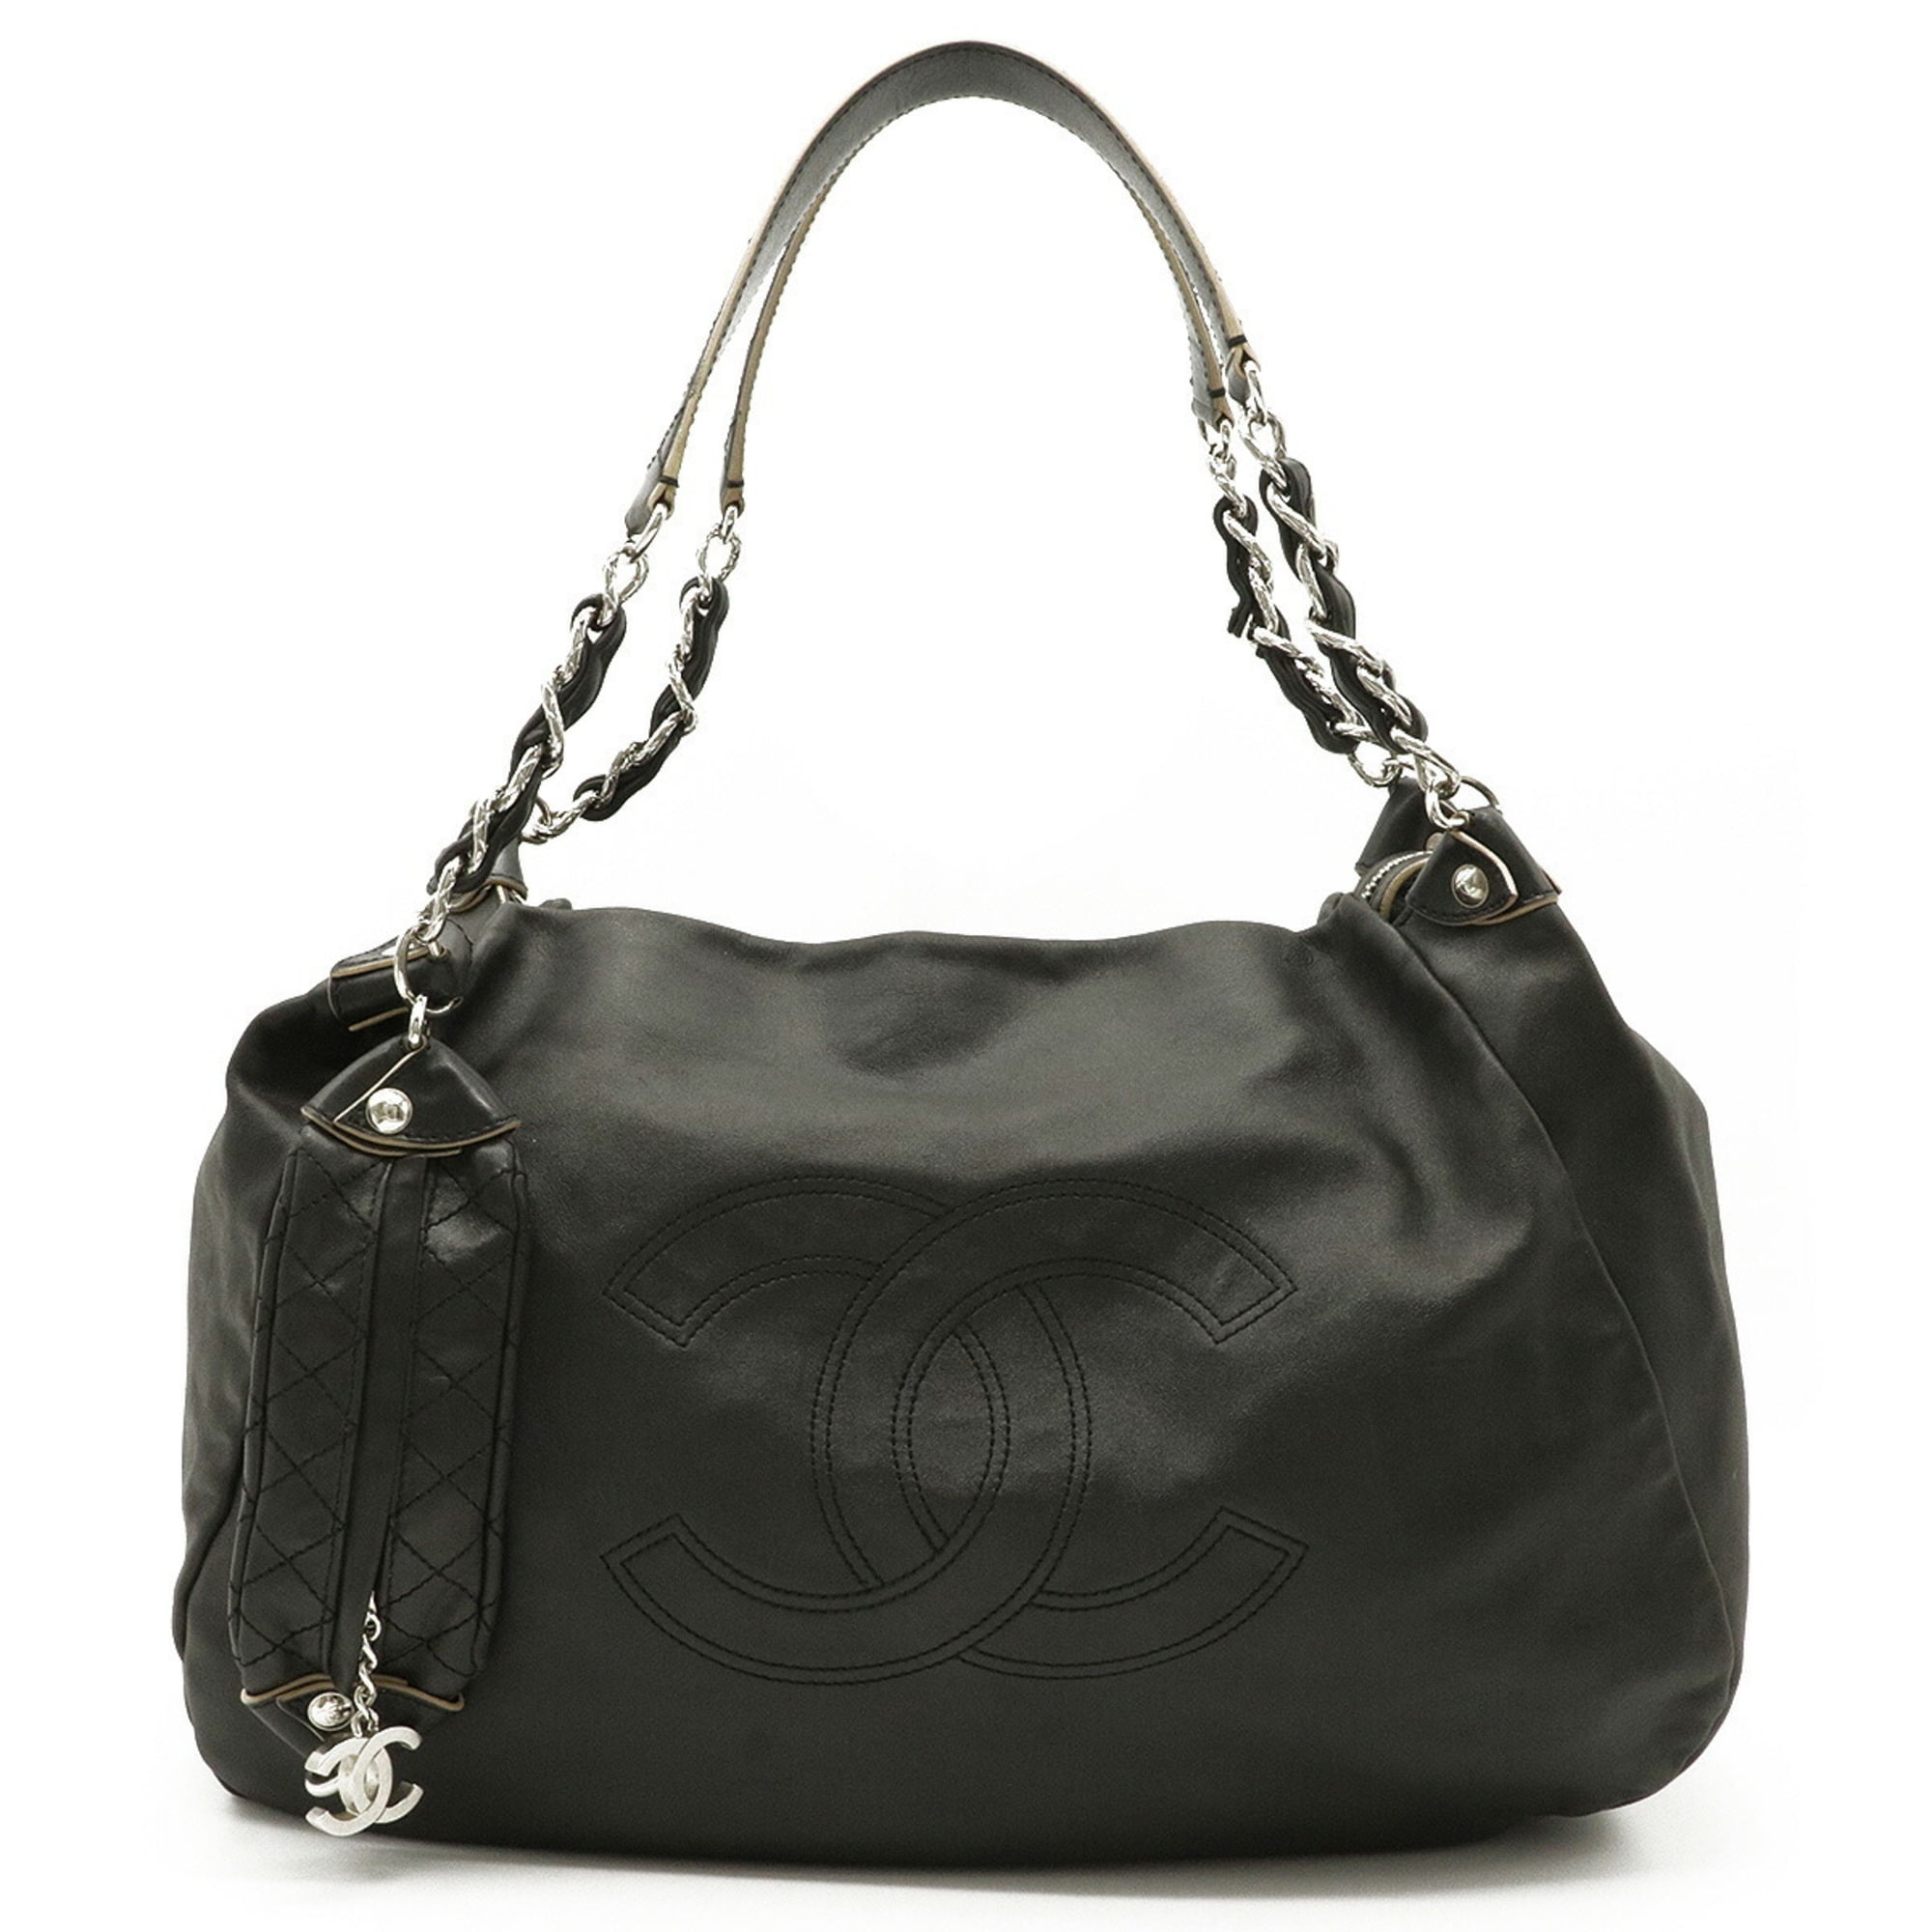 Chanel shoulder bag ladies black leather chain